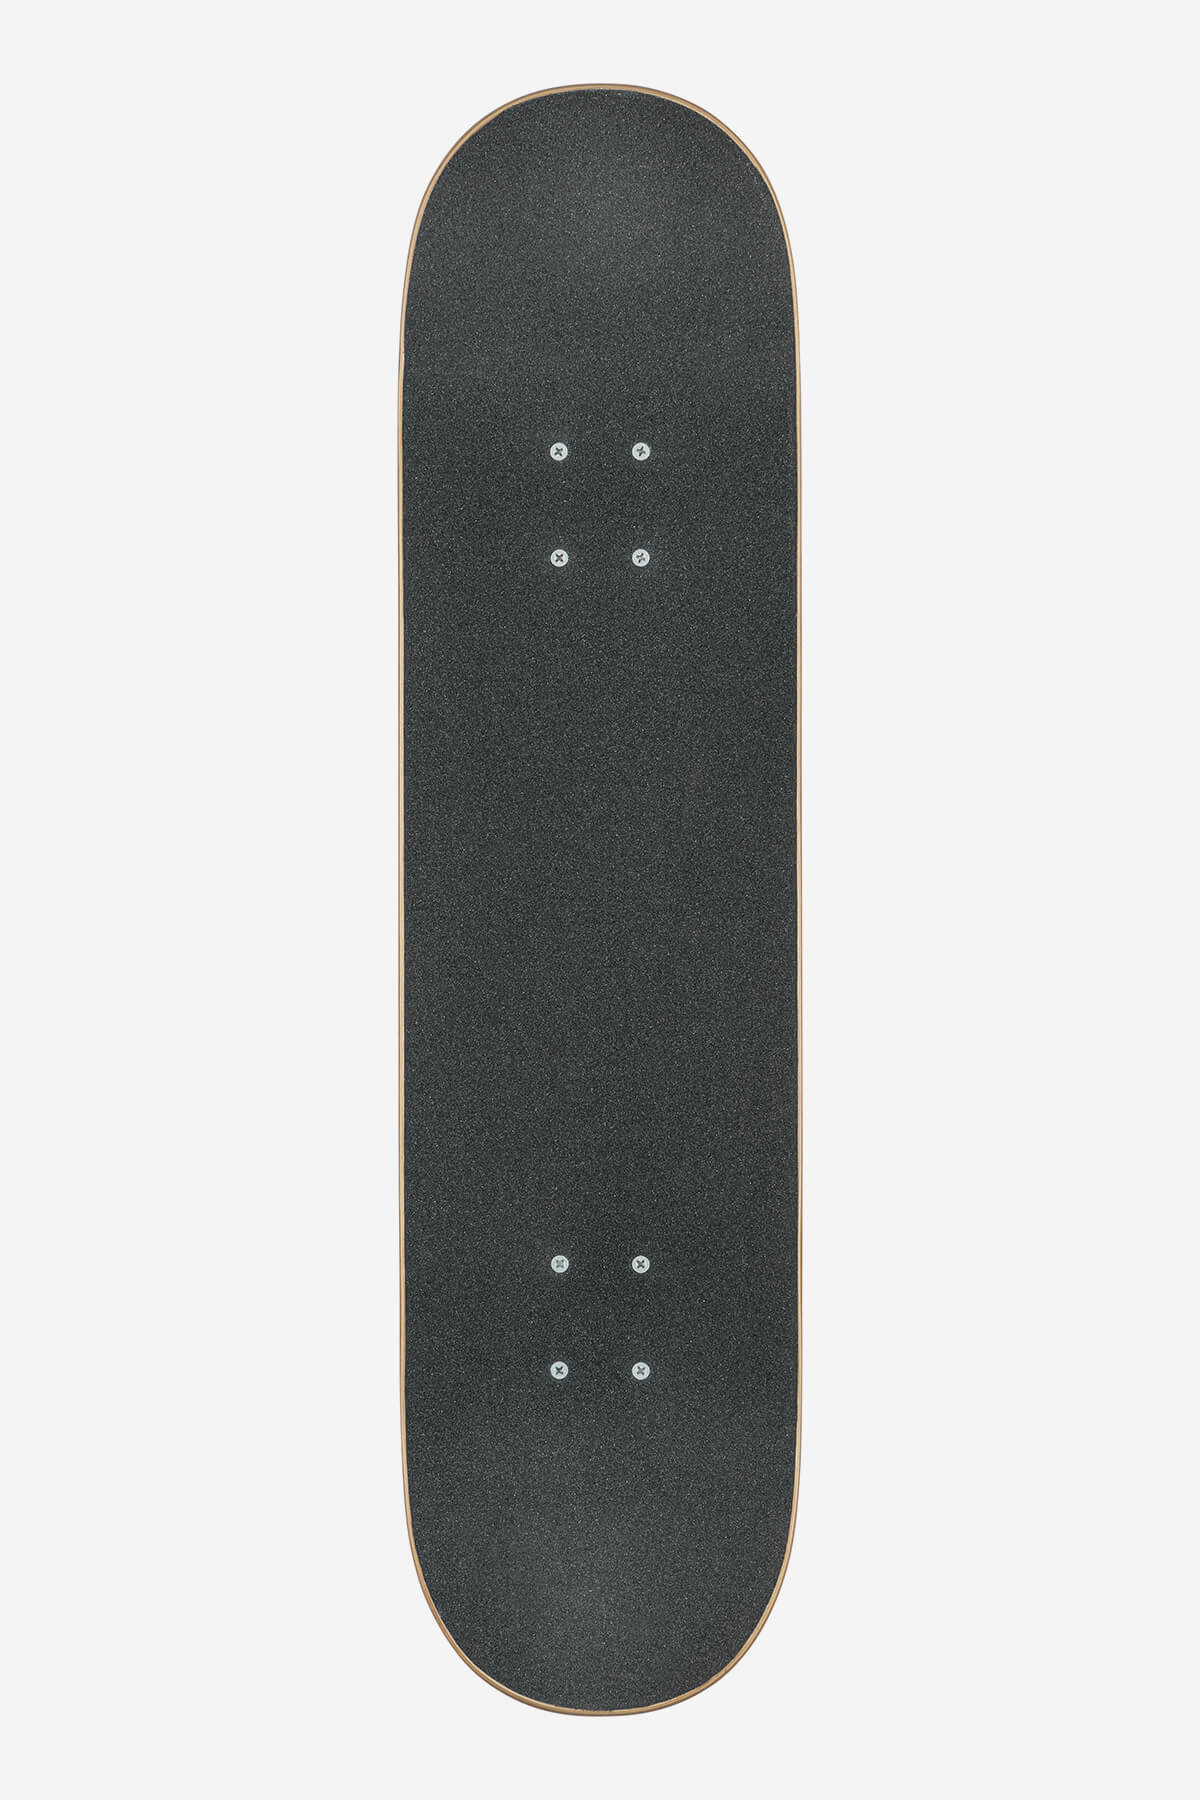 Globe - G0 Block Serif - White/Red - 8,0" completo Skateboard